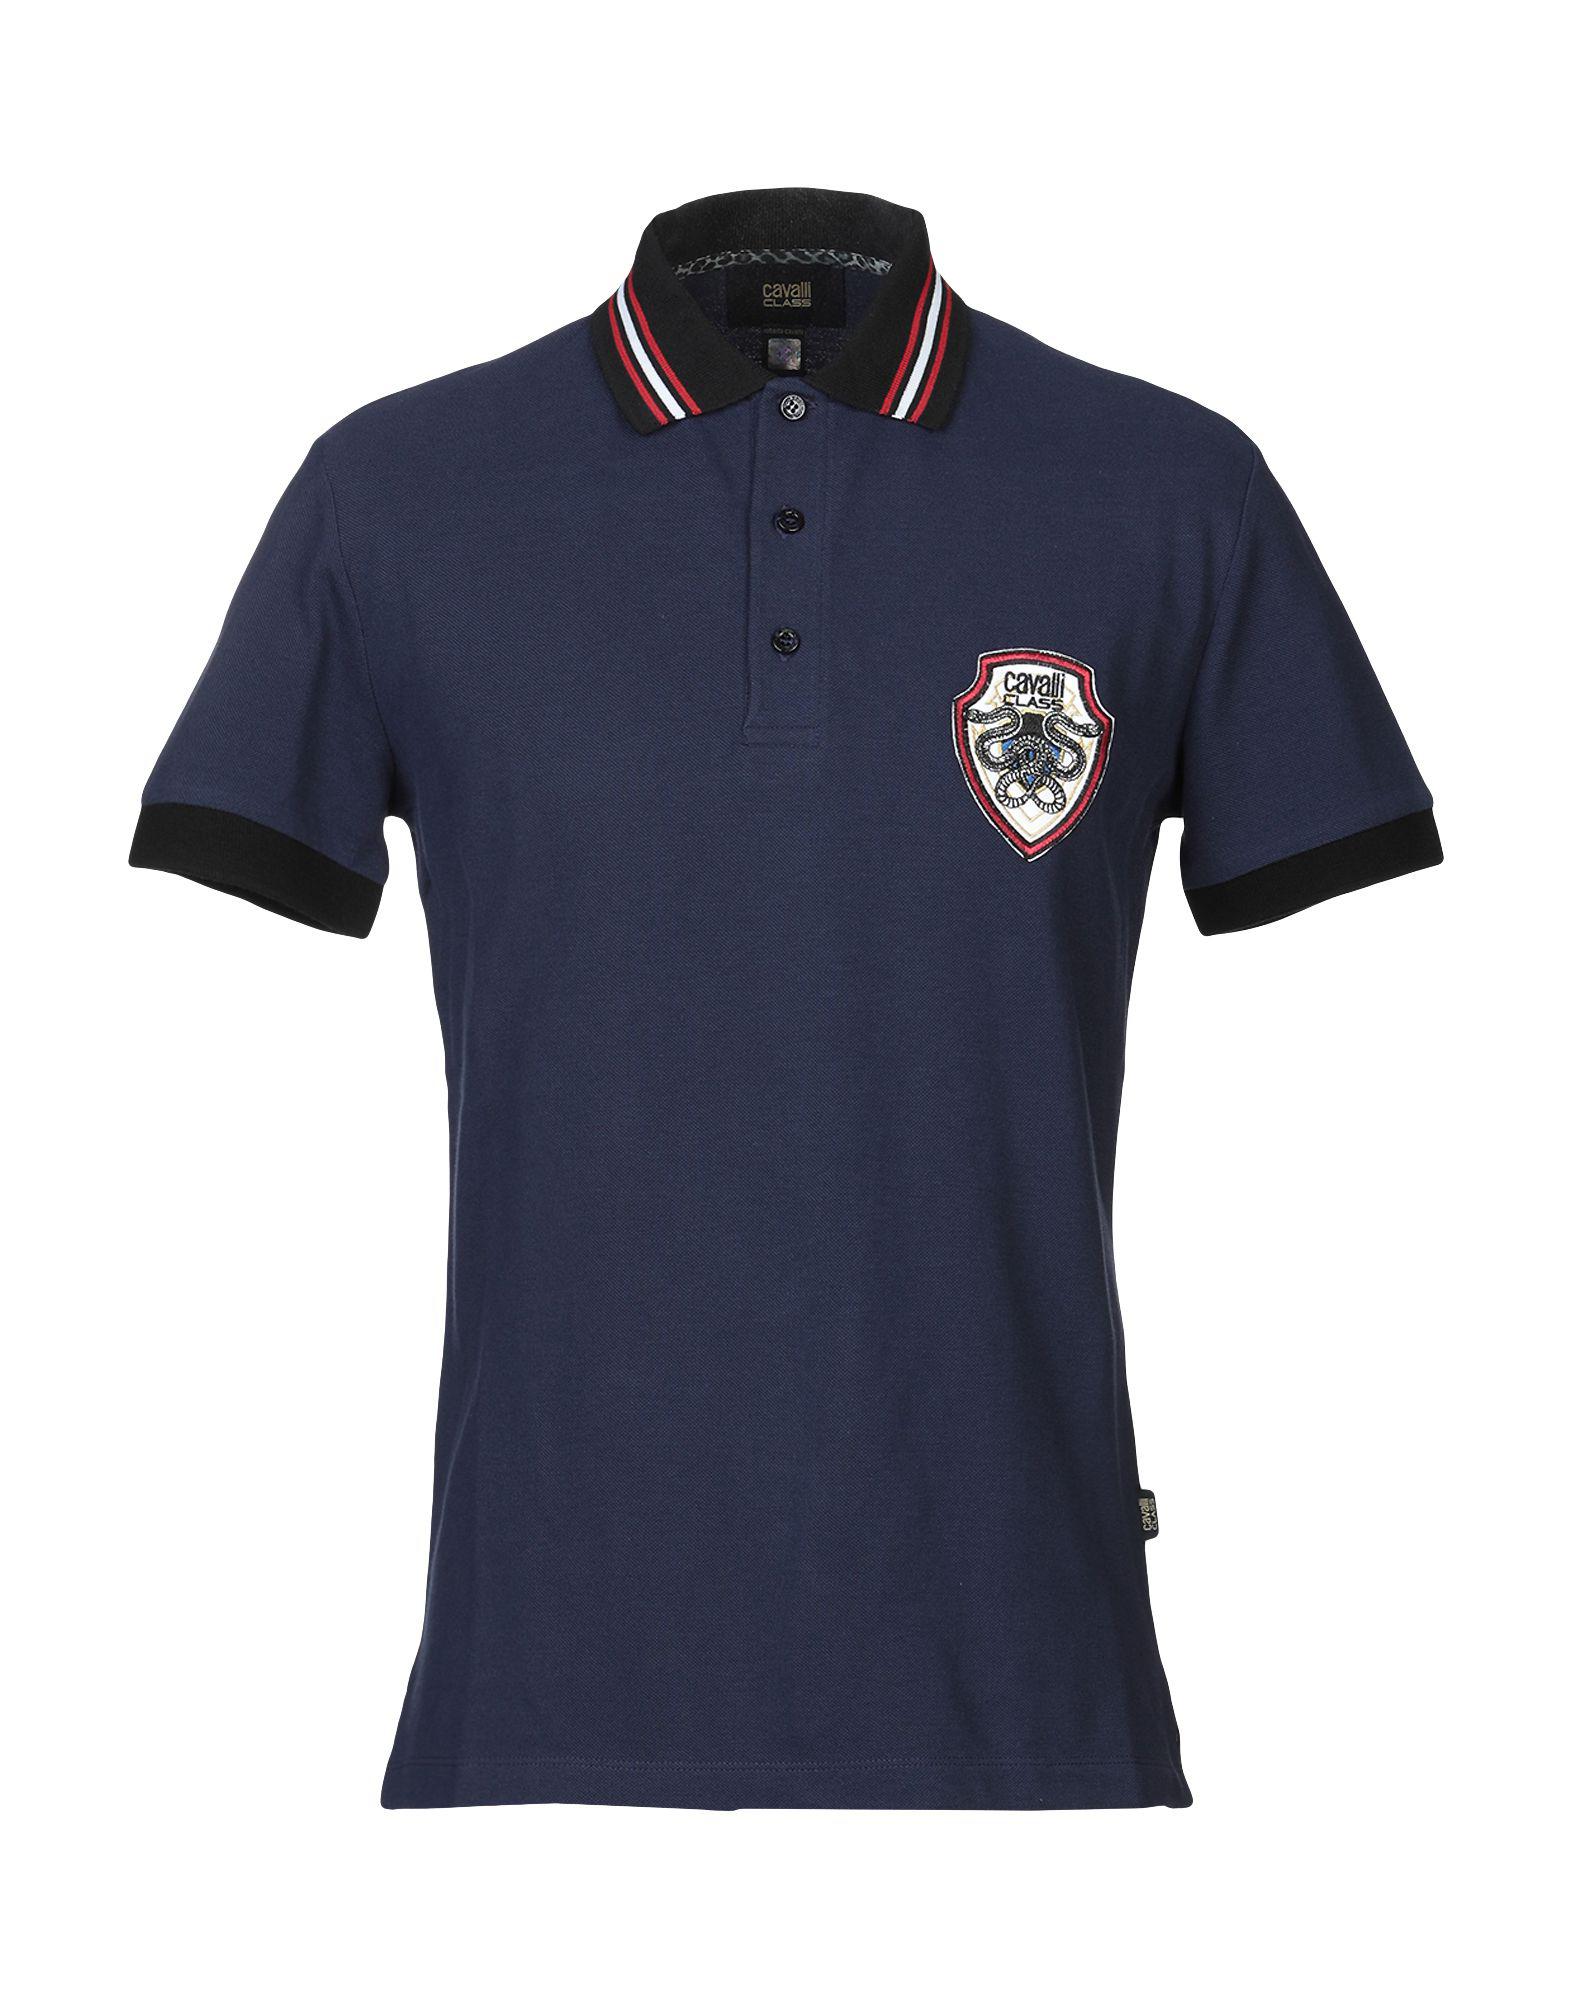 Class Roberto Cavalli Cotton Polo Shirt in Dark Blue (Blue) for Men - Lyst